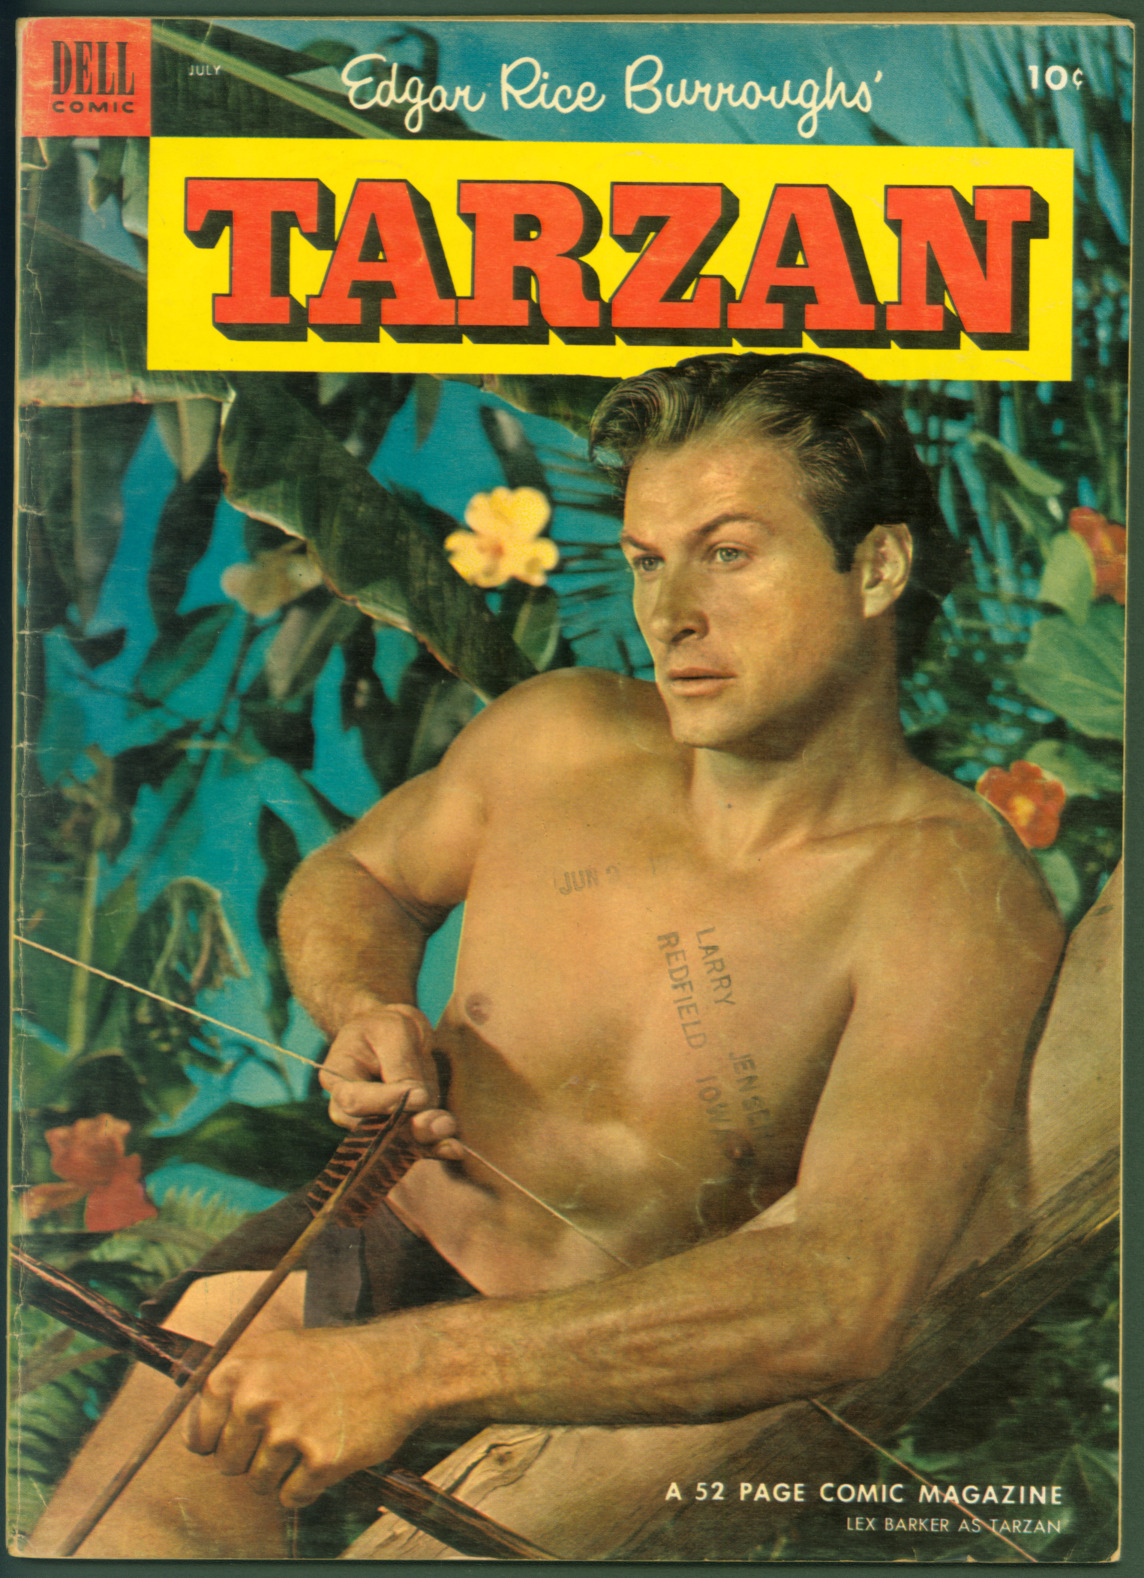 VTG 1953 Golden Age Dell Comics Tarzan #46 VG Lex Barker Photo Cover